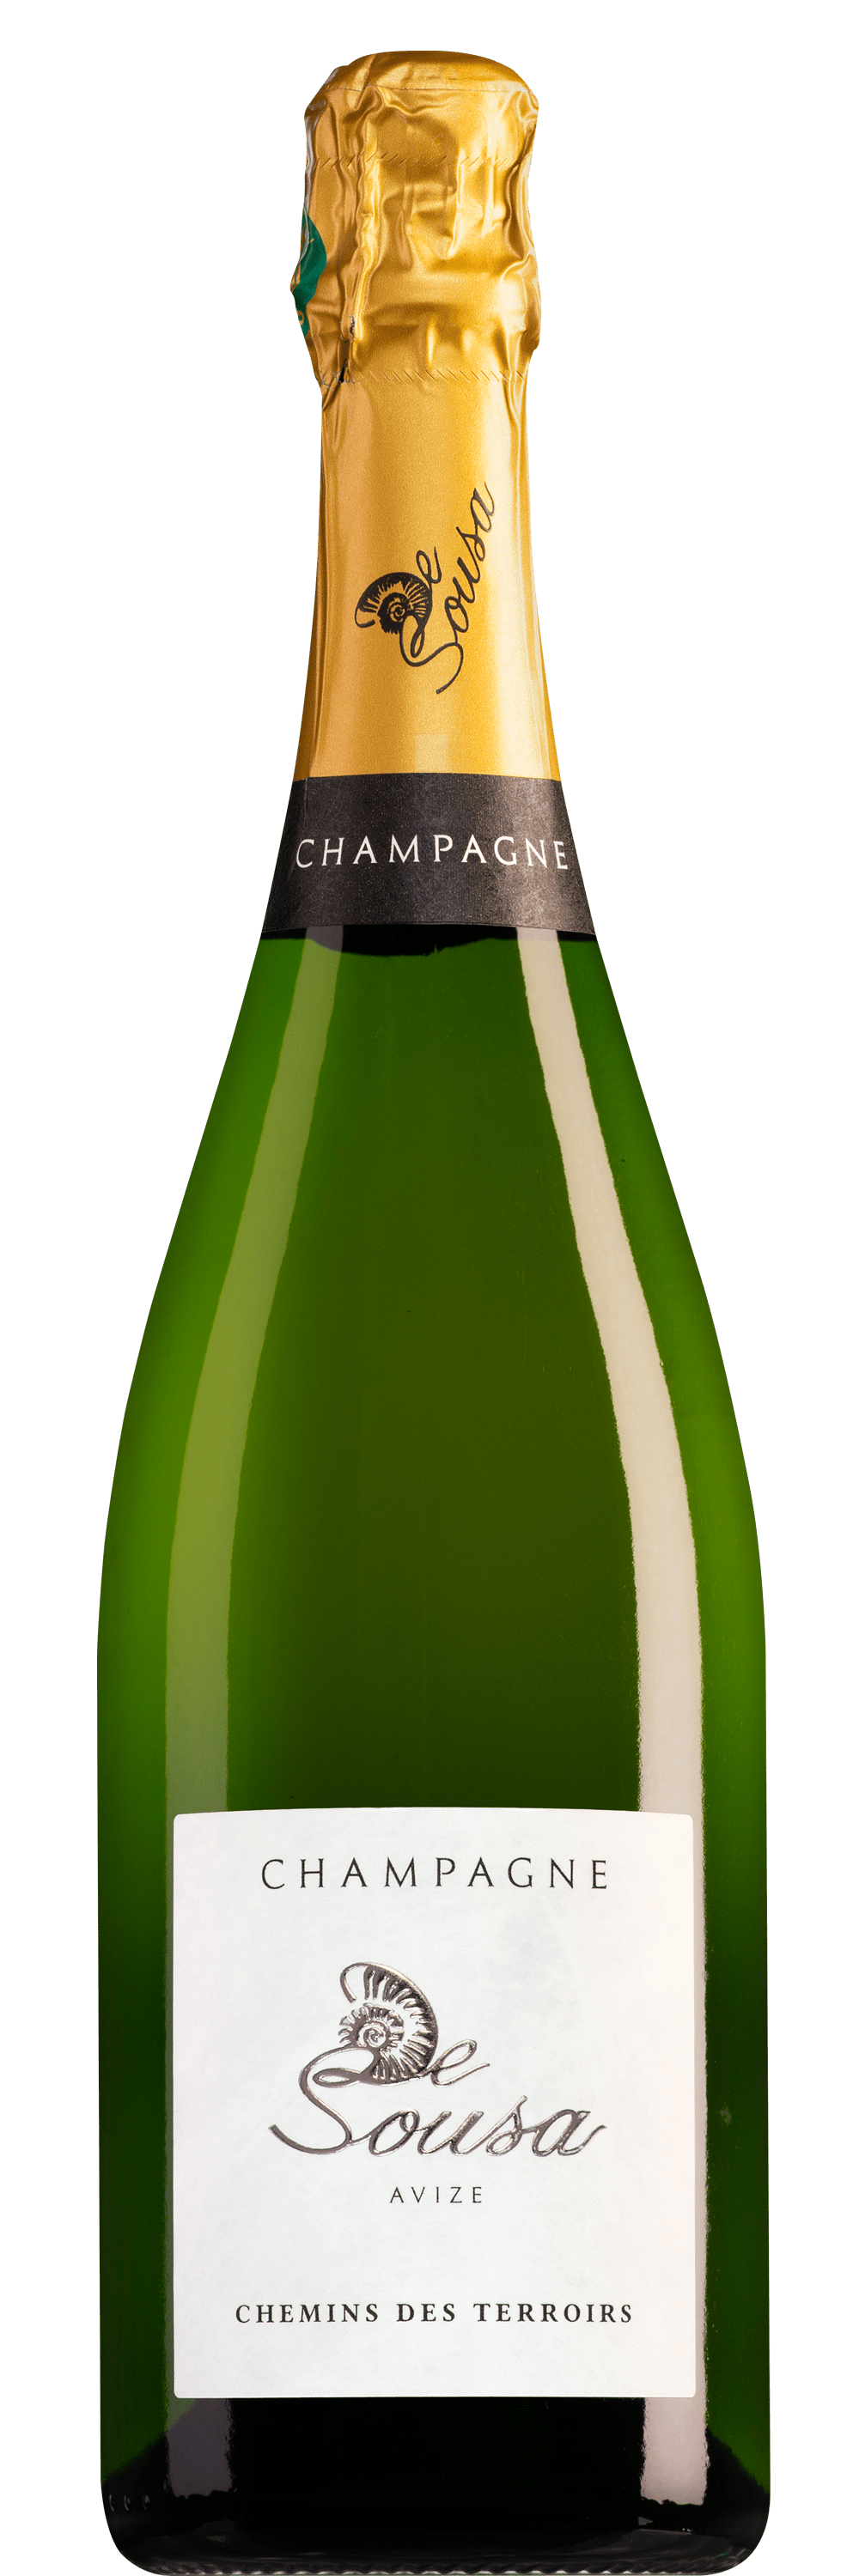 Champagne Chemins des Terroirs